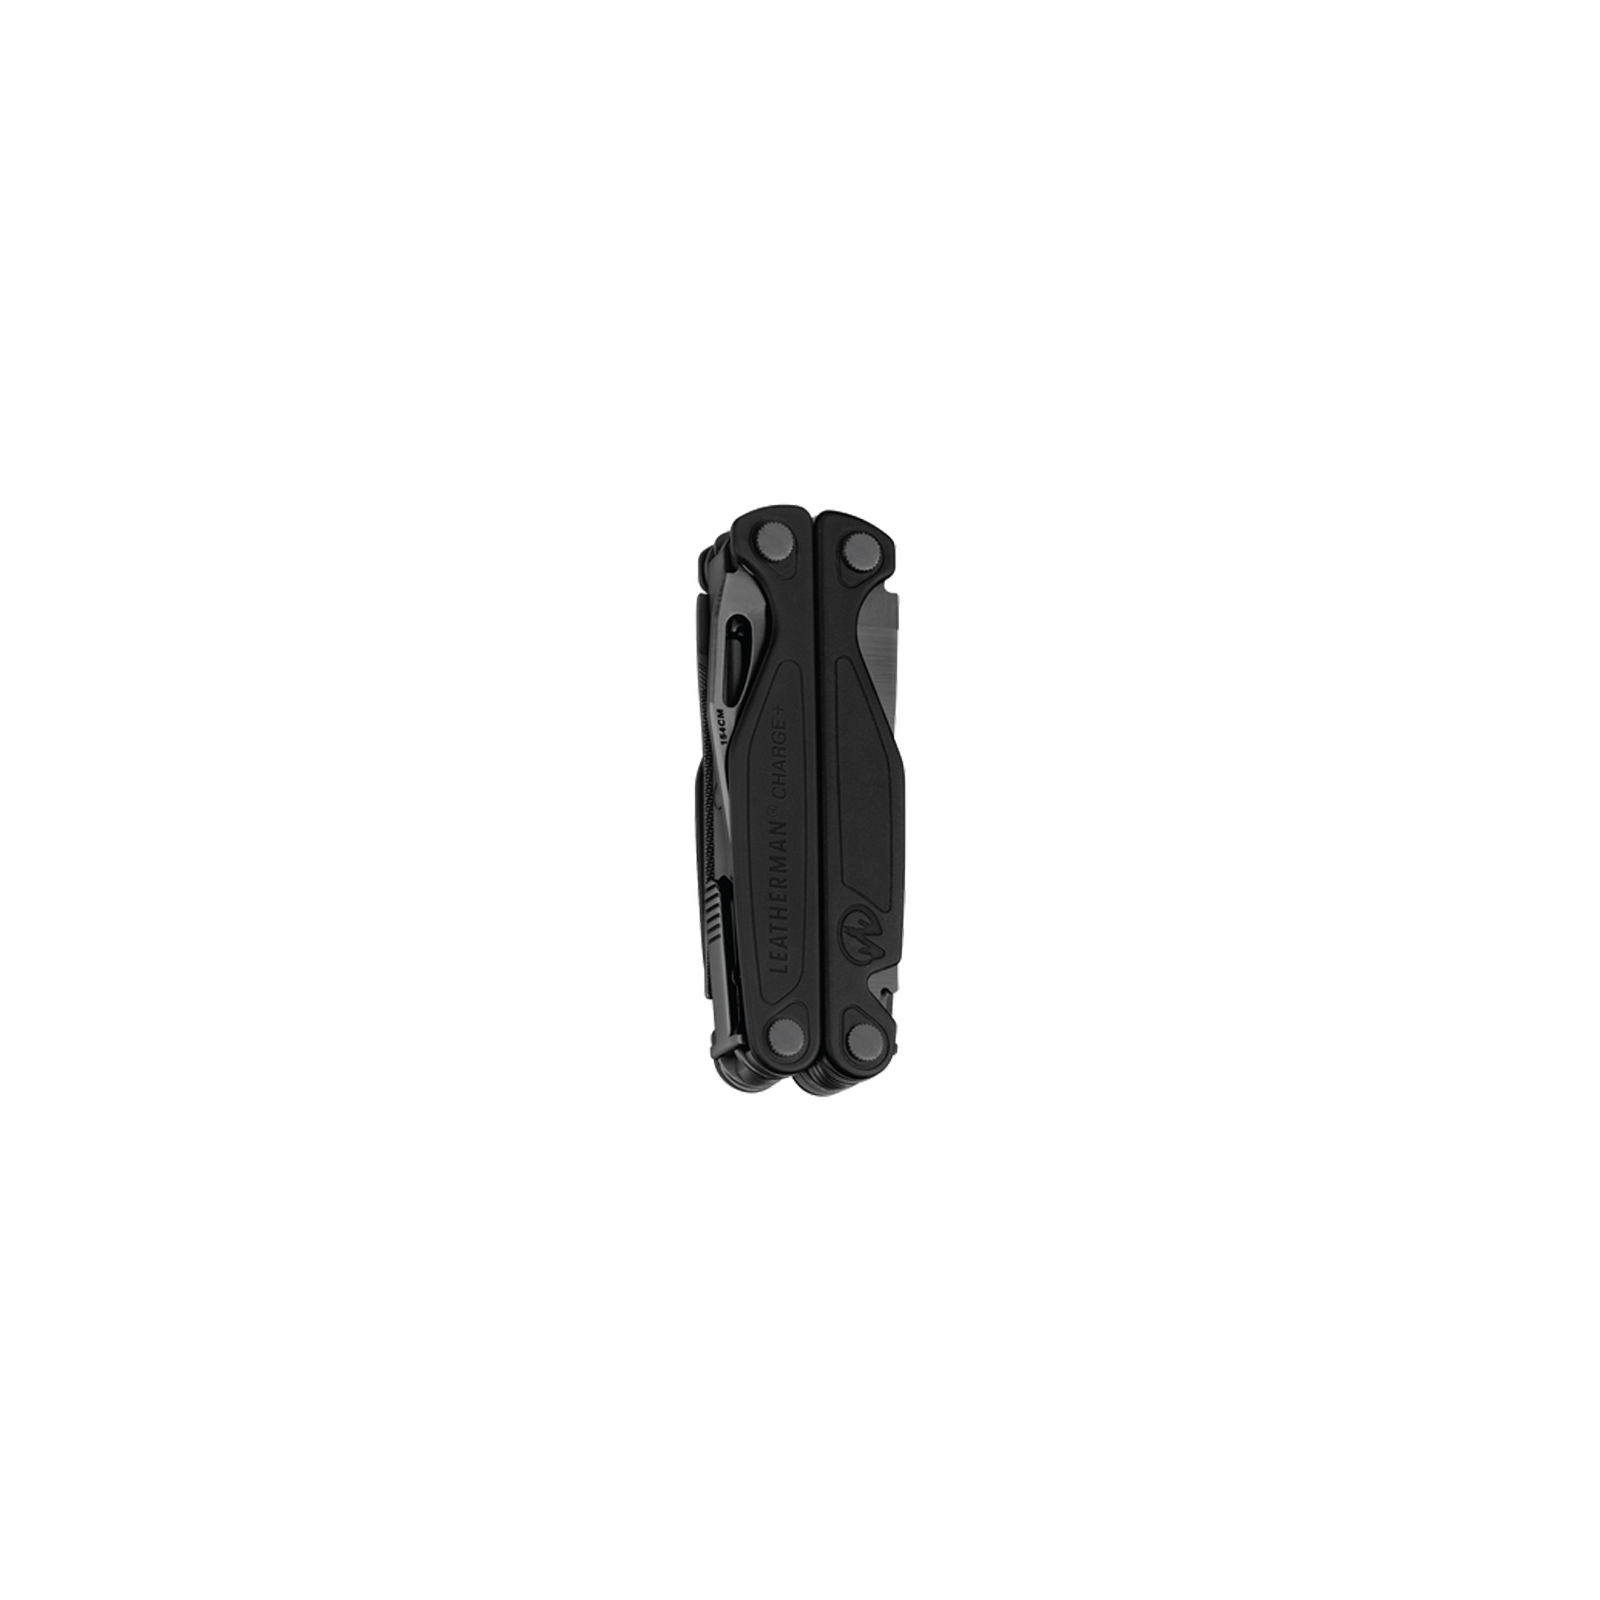 Мультитул Leatherman Charge Plus Black, синтетич. чехол, карт. кор., метрич. биты (832601) изображение 3